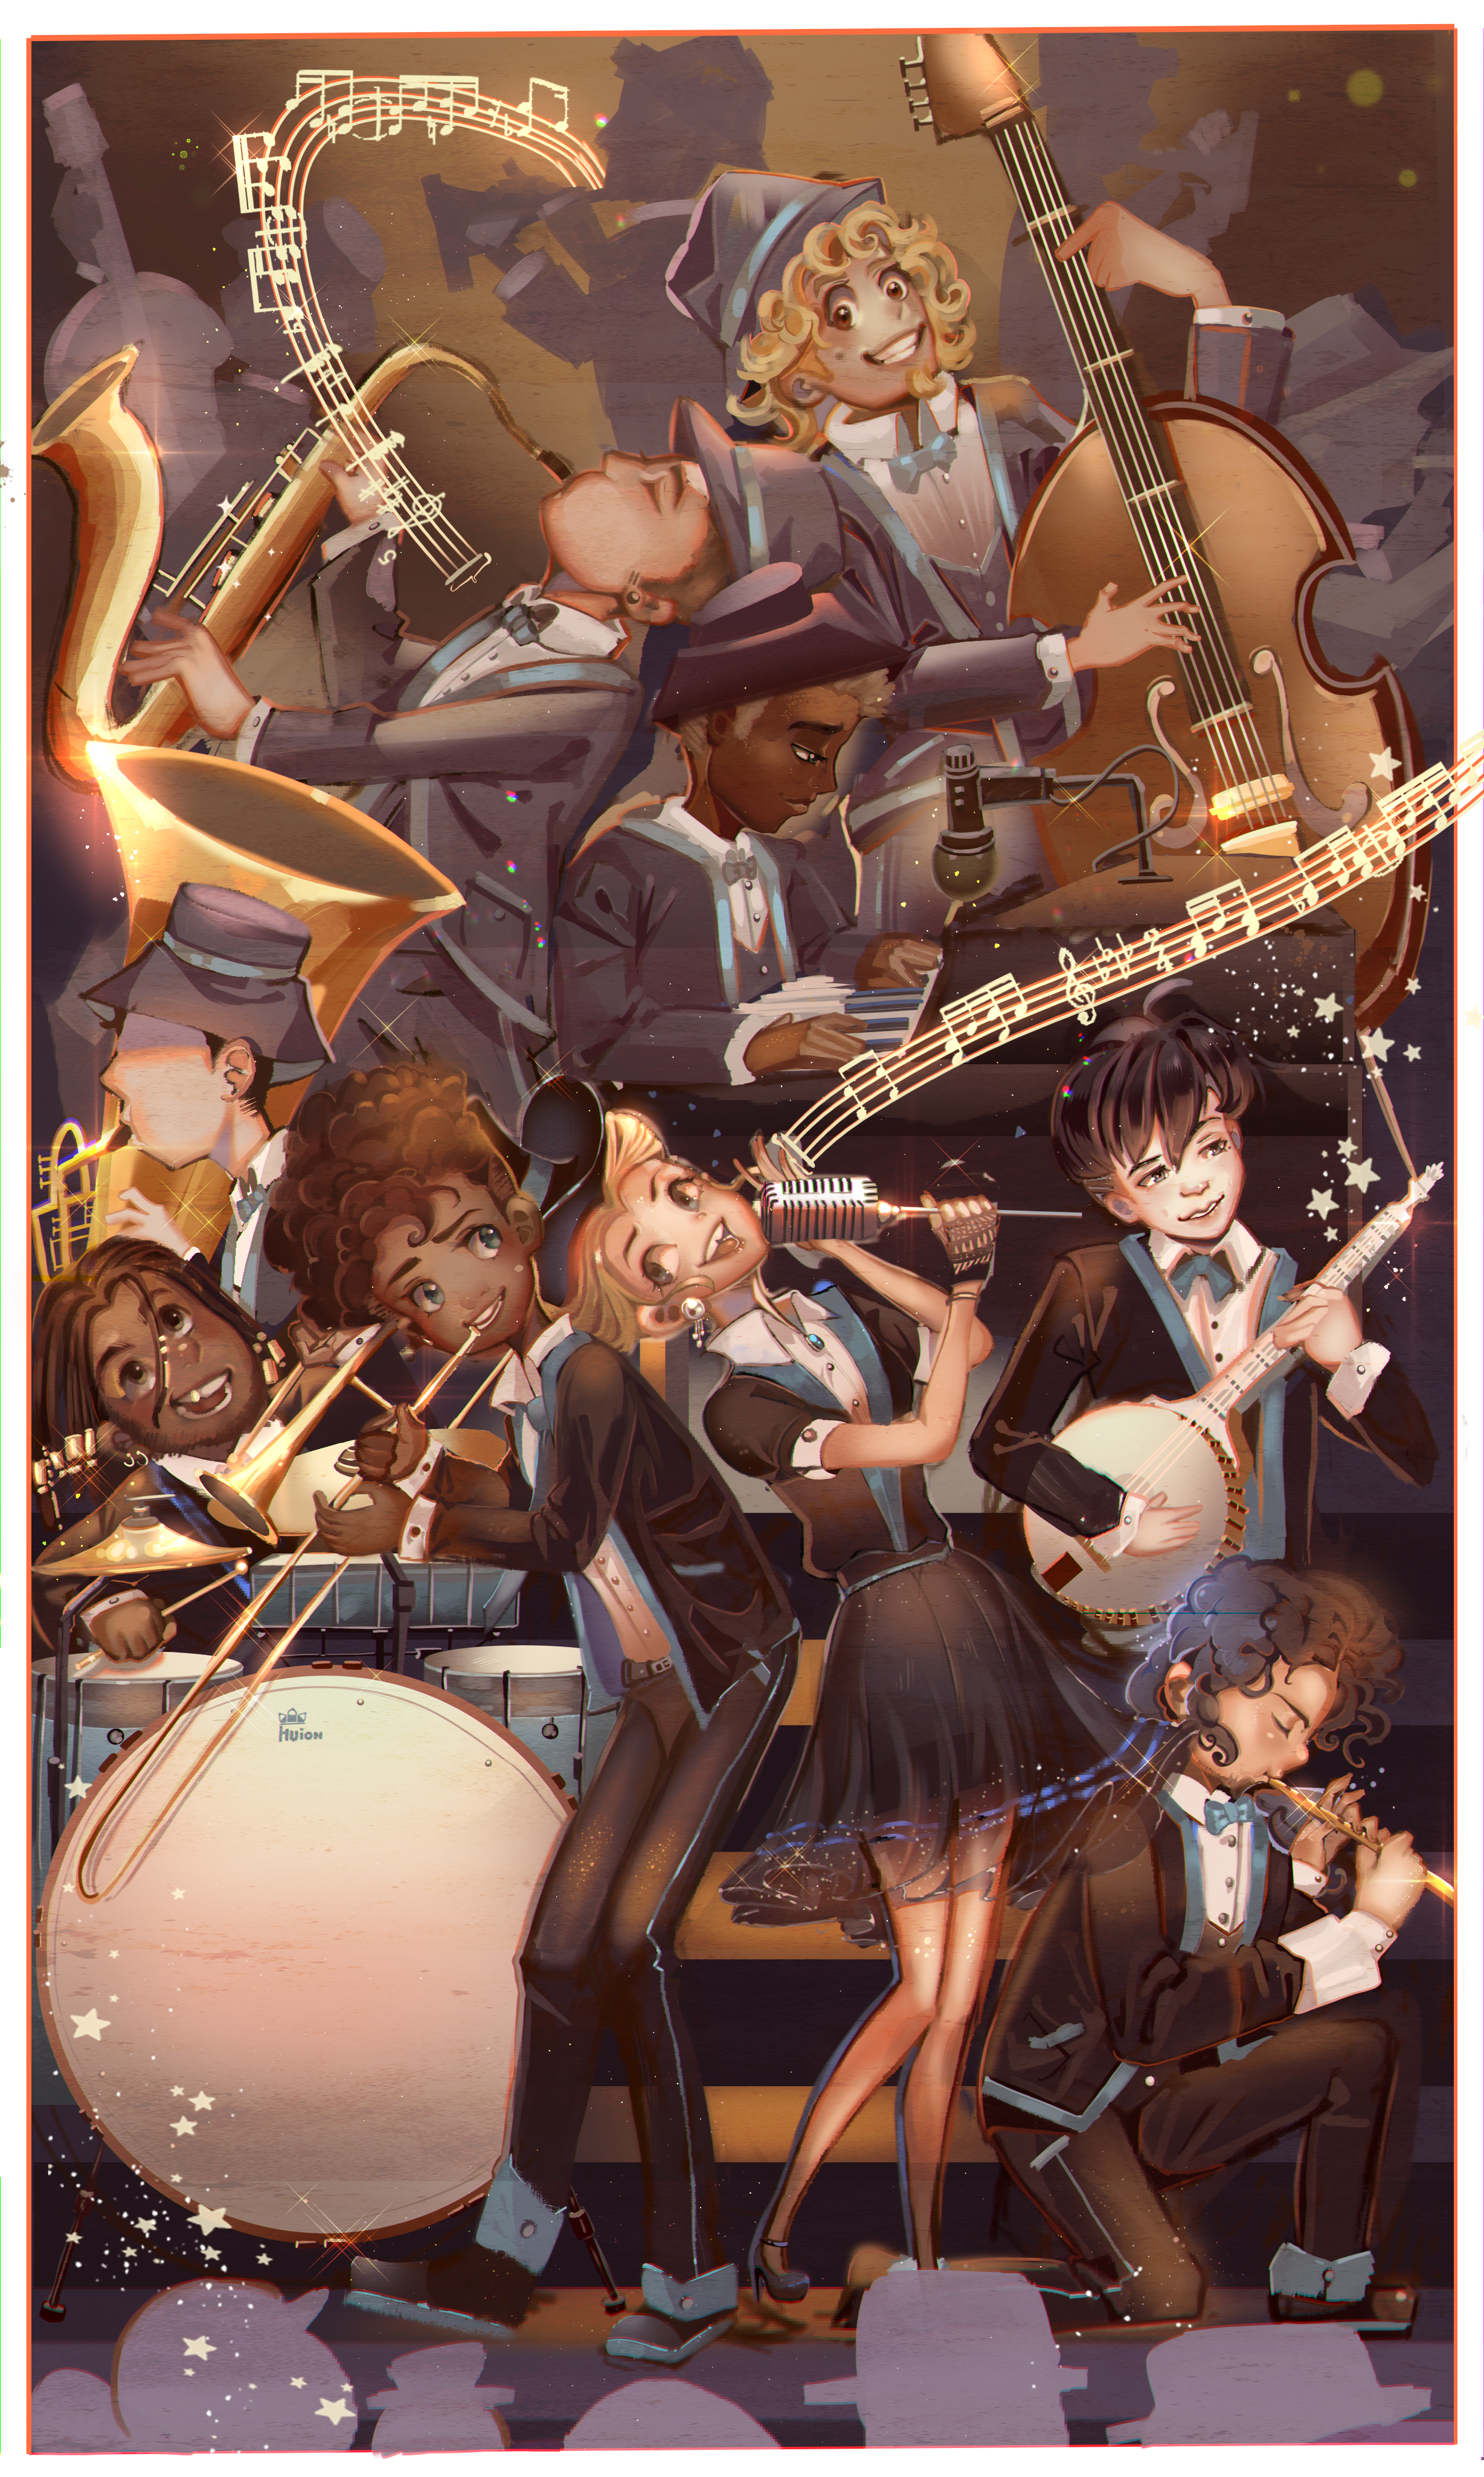 The Jazz band